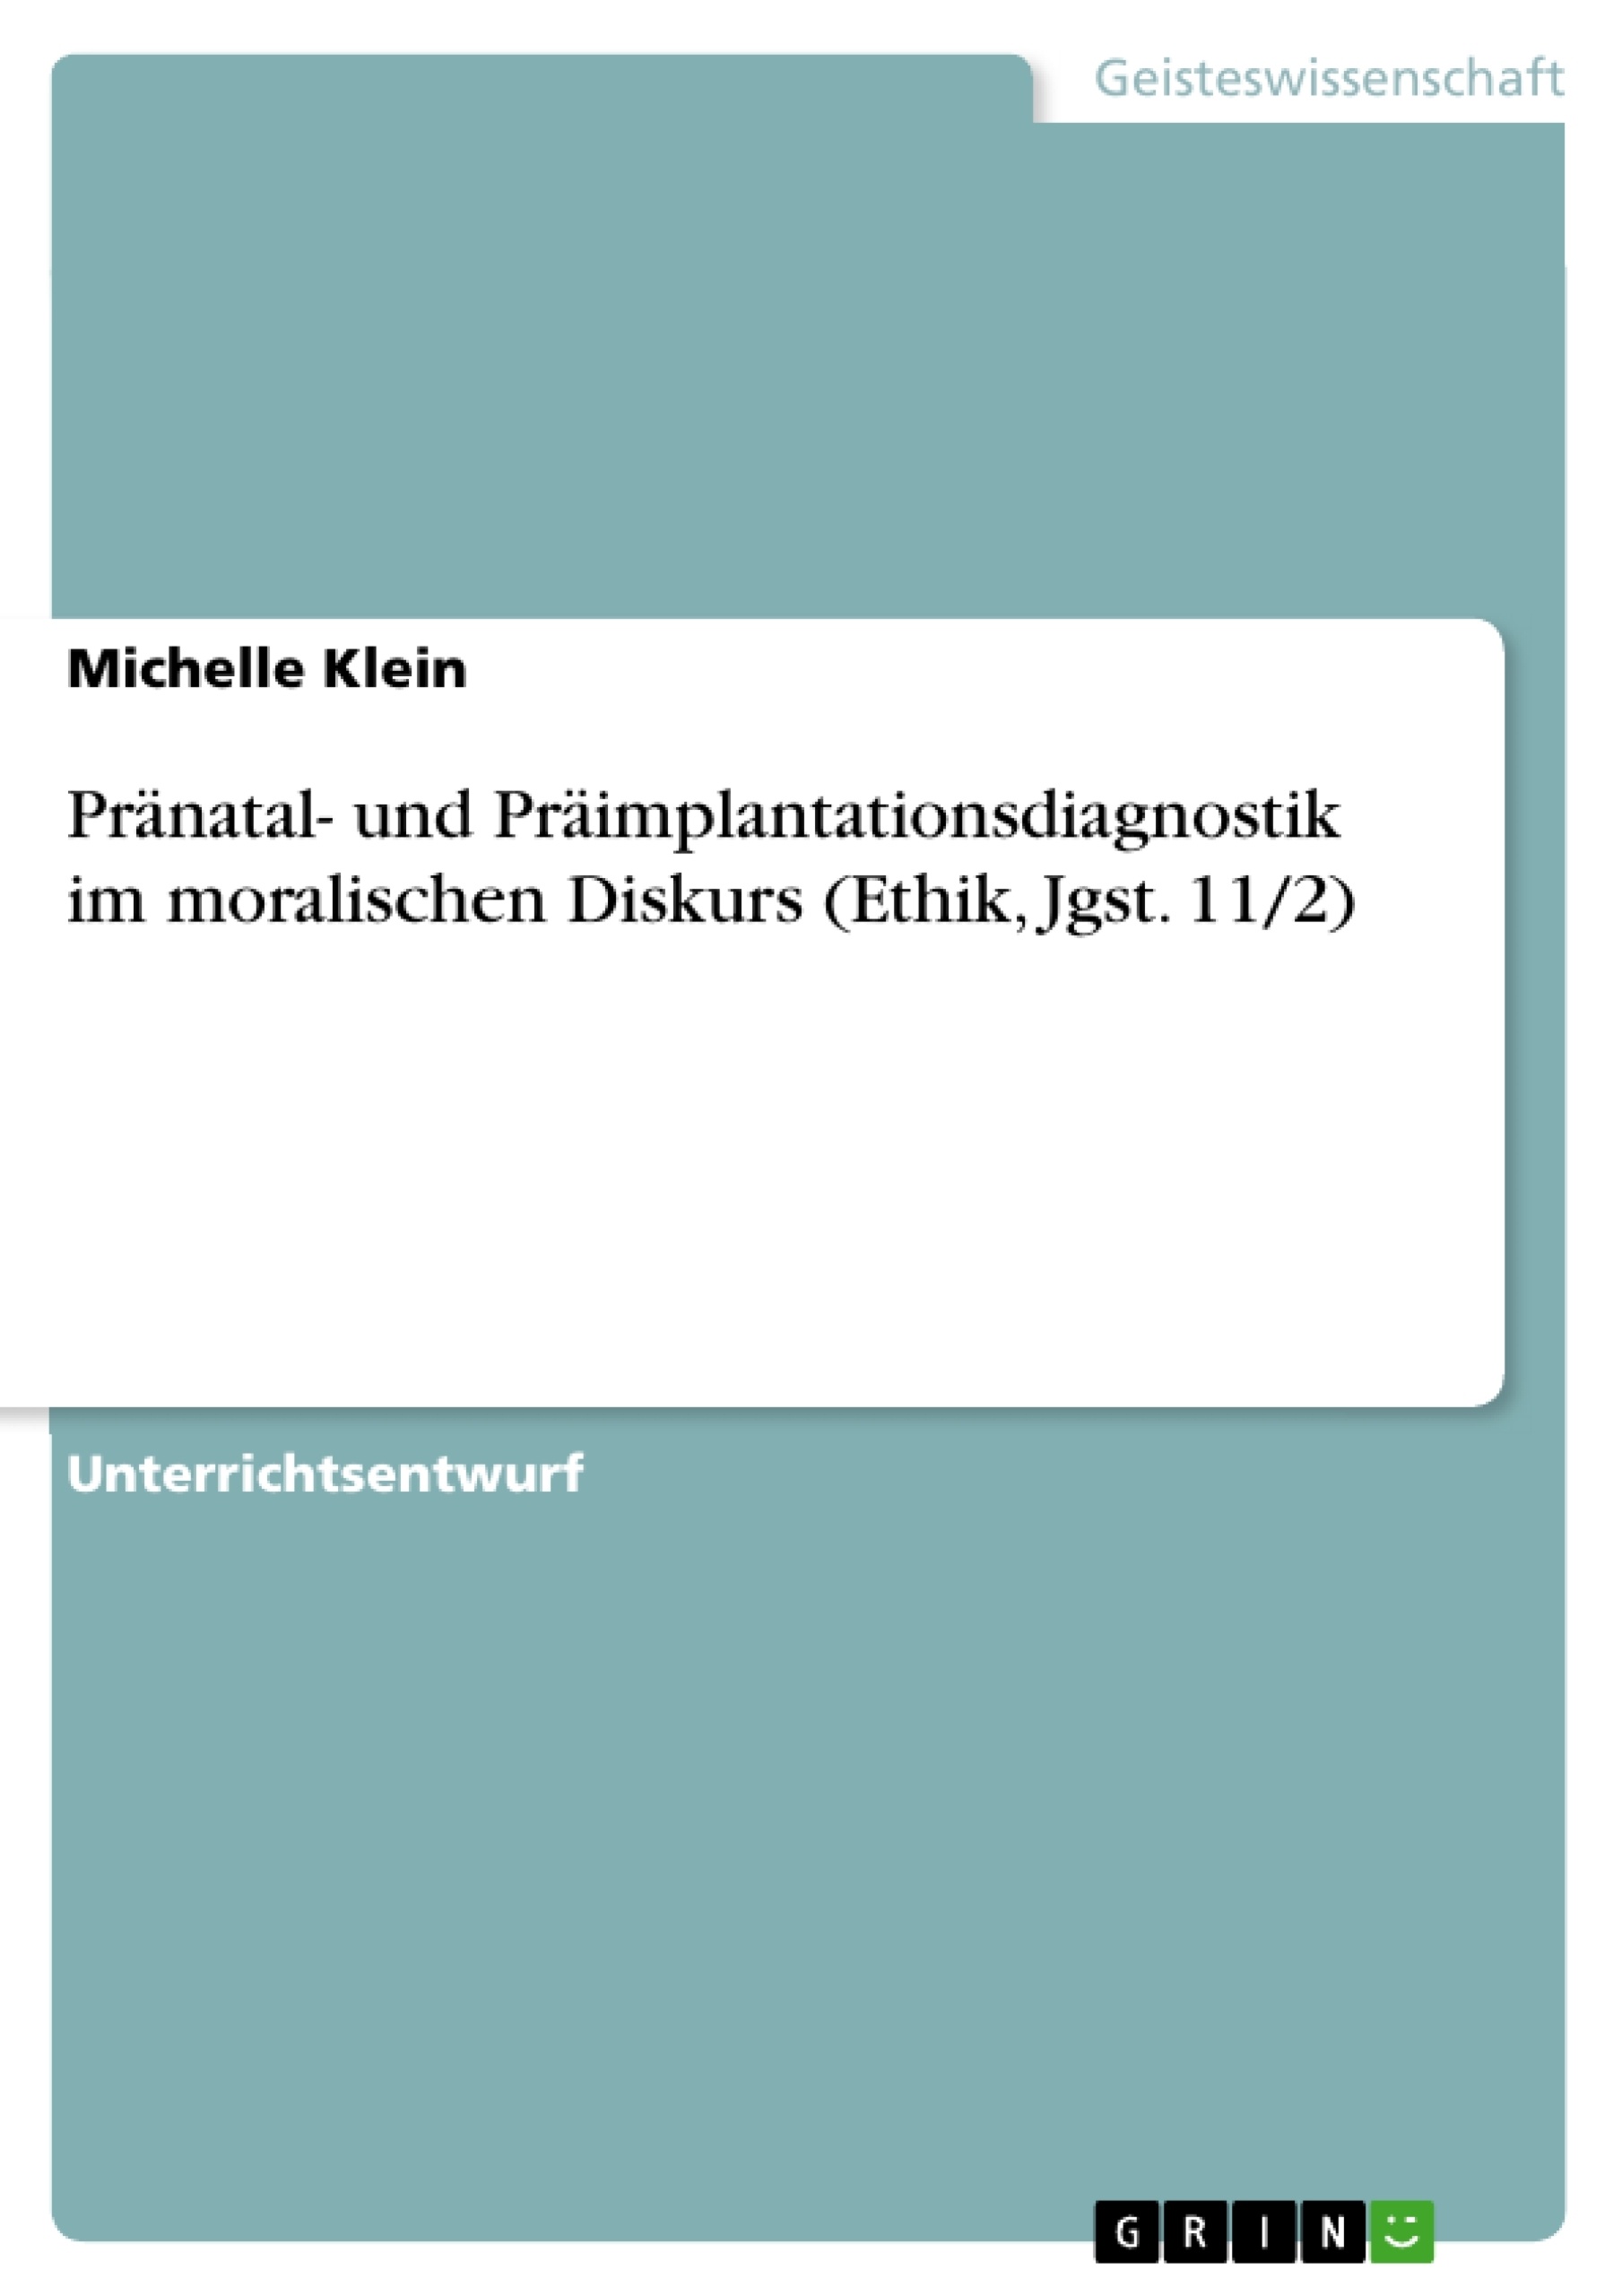 Title: Pränatal- und Präimplantationsdiagnostik im moralischen Diskurs (Ethik, Jgst. 11/2)